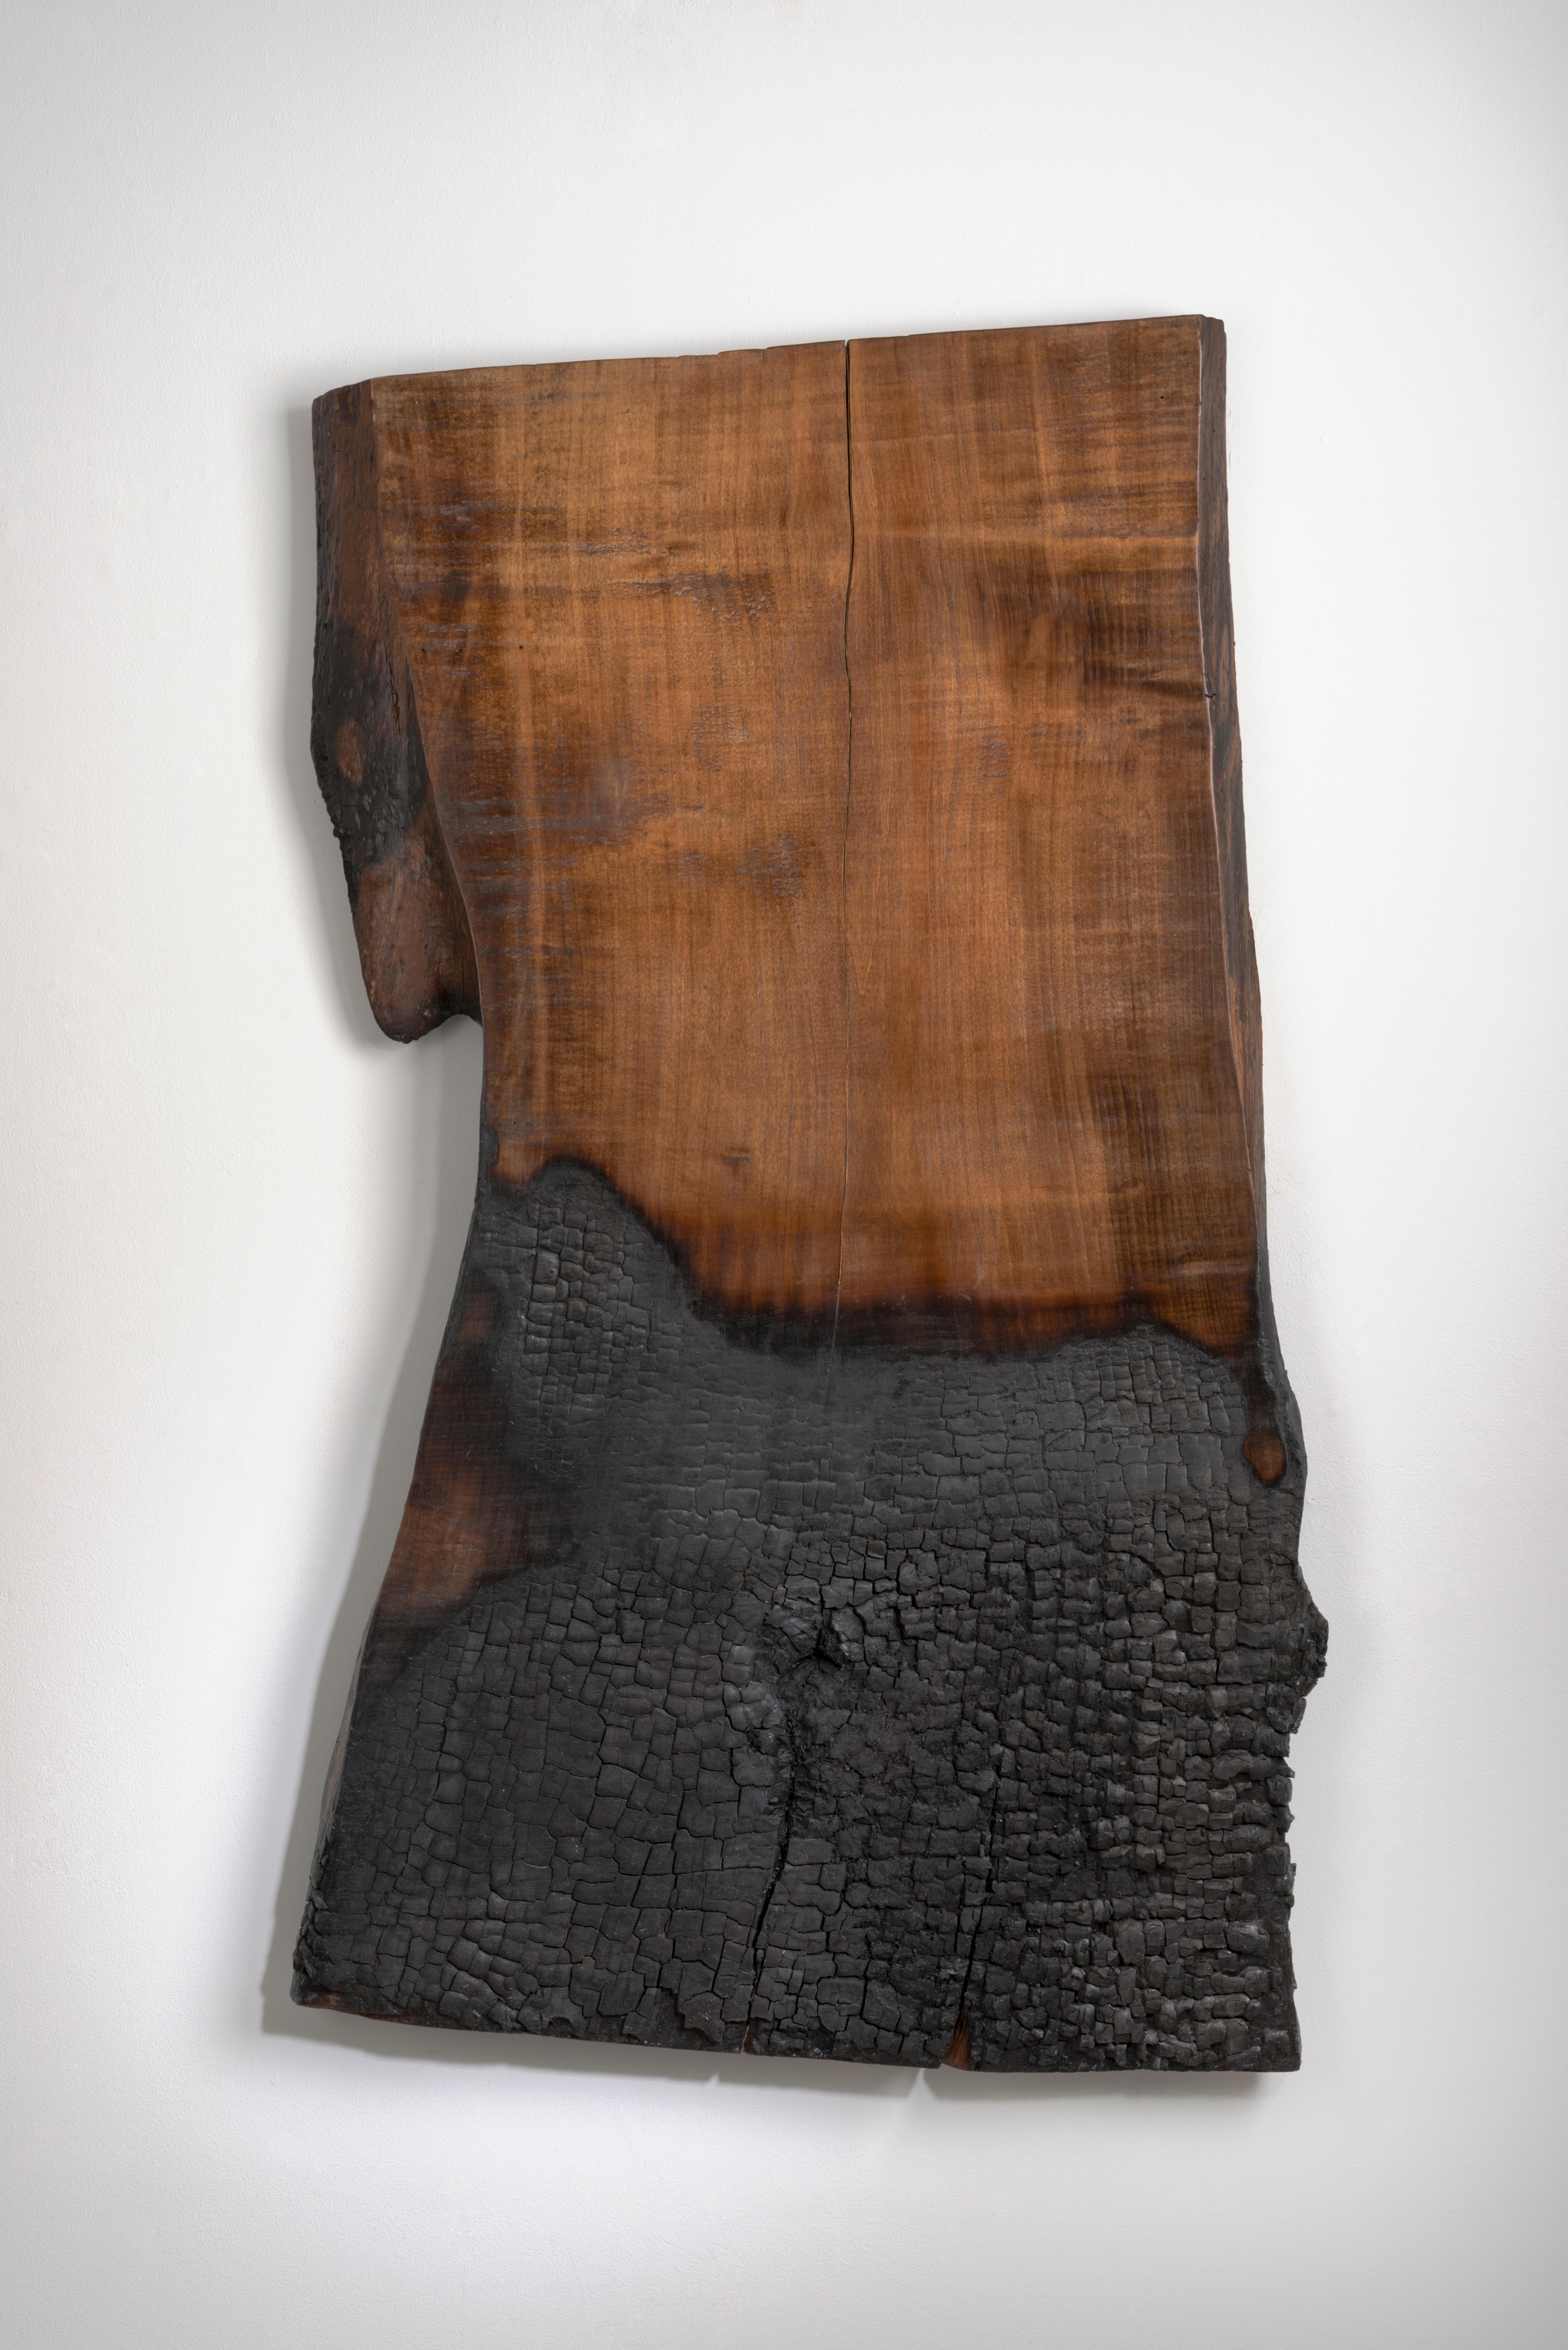 burnt wood sculpture